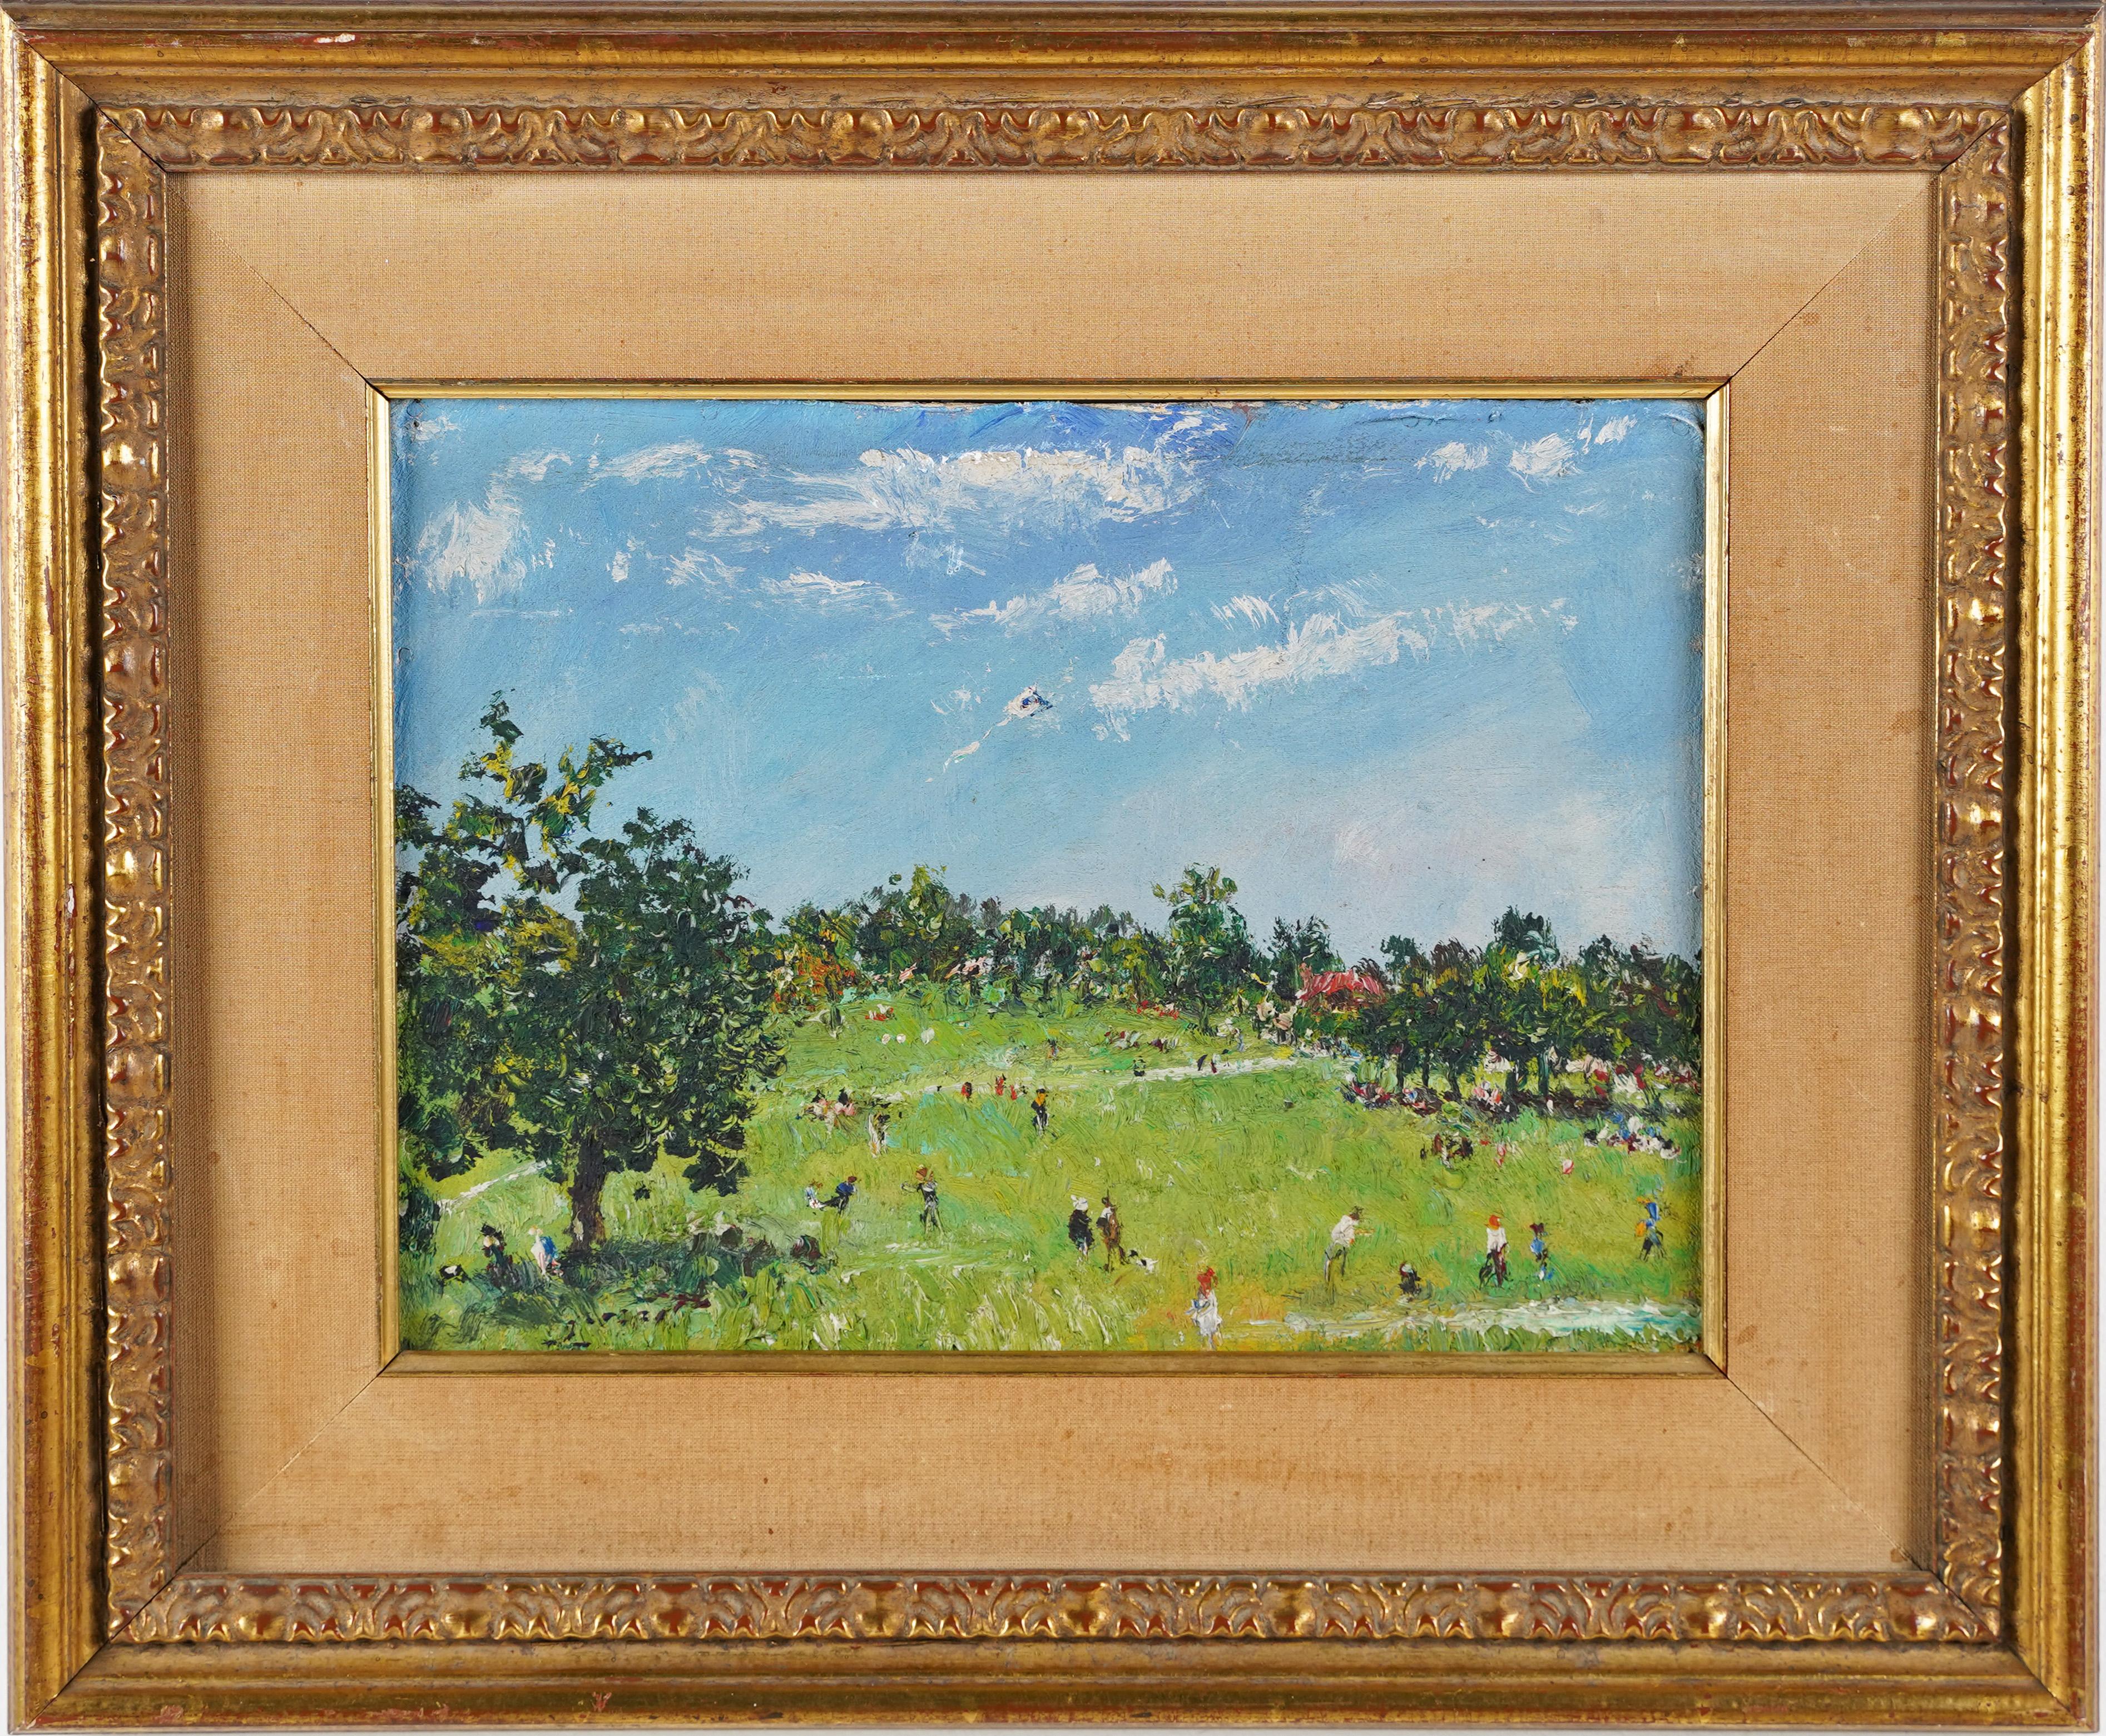 Samuel Rothbort Landscape Painting - Antique American Impressionist Signed Framed Bustling Park View Oil Painting